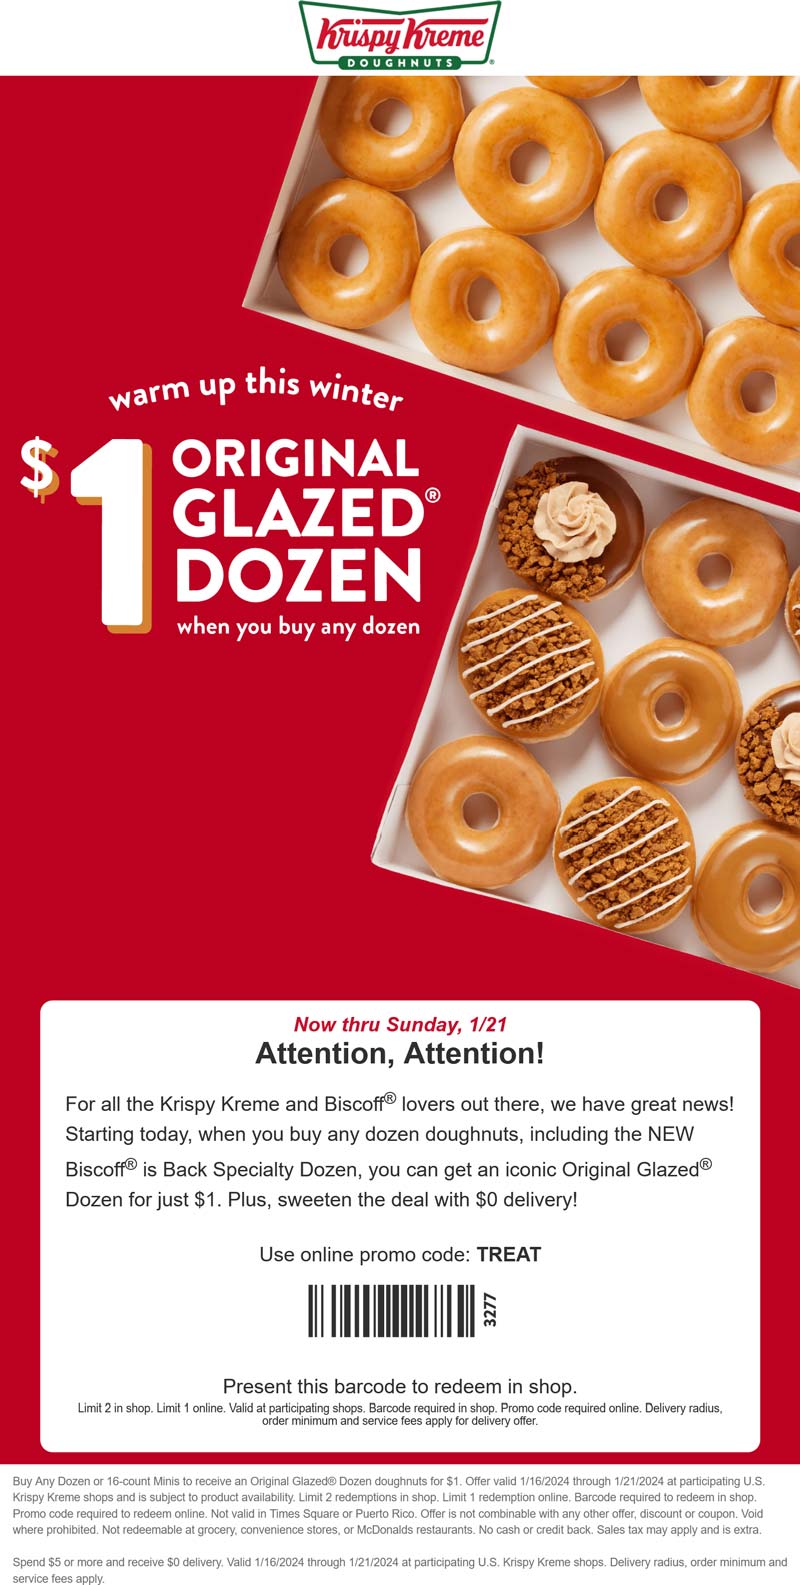 Second dozen doughnuts for $1 + free delivery on $5 at Krispy Kreme, or online via promo code TREAT #krispykreme